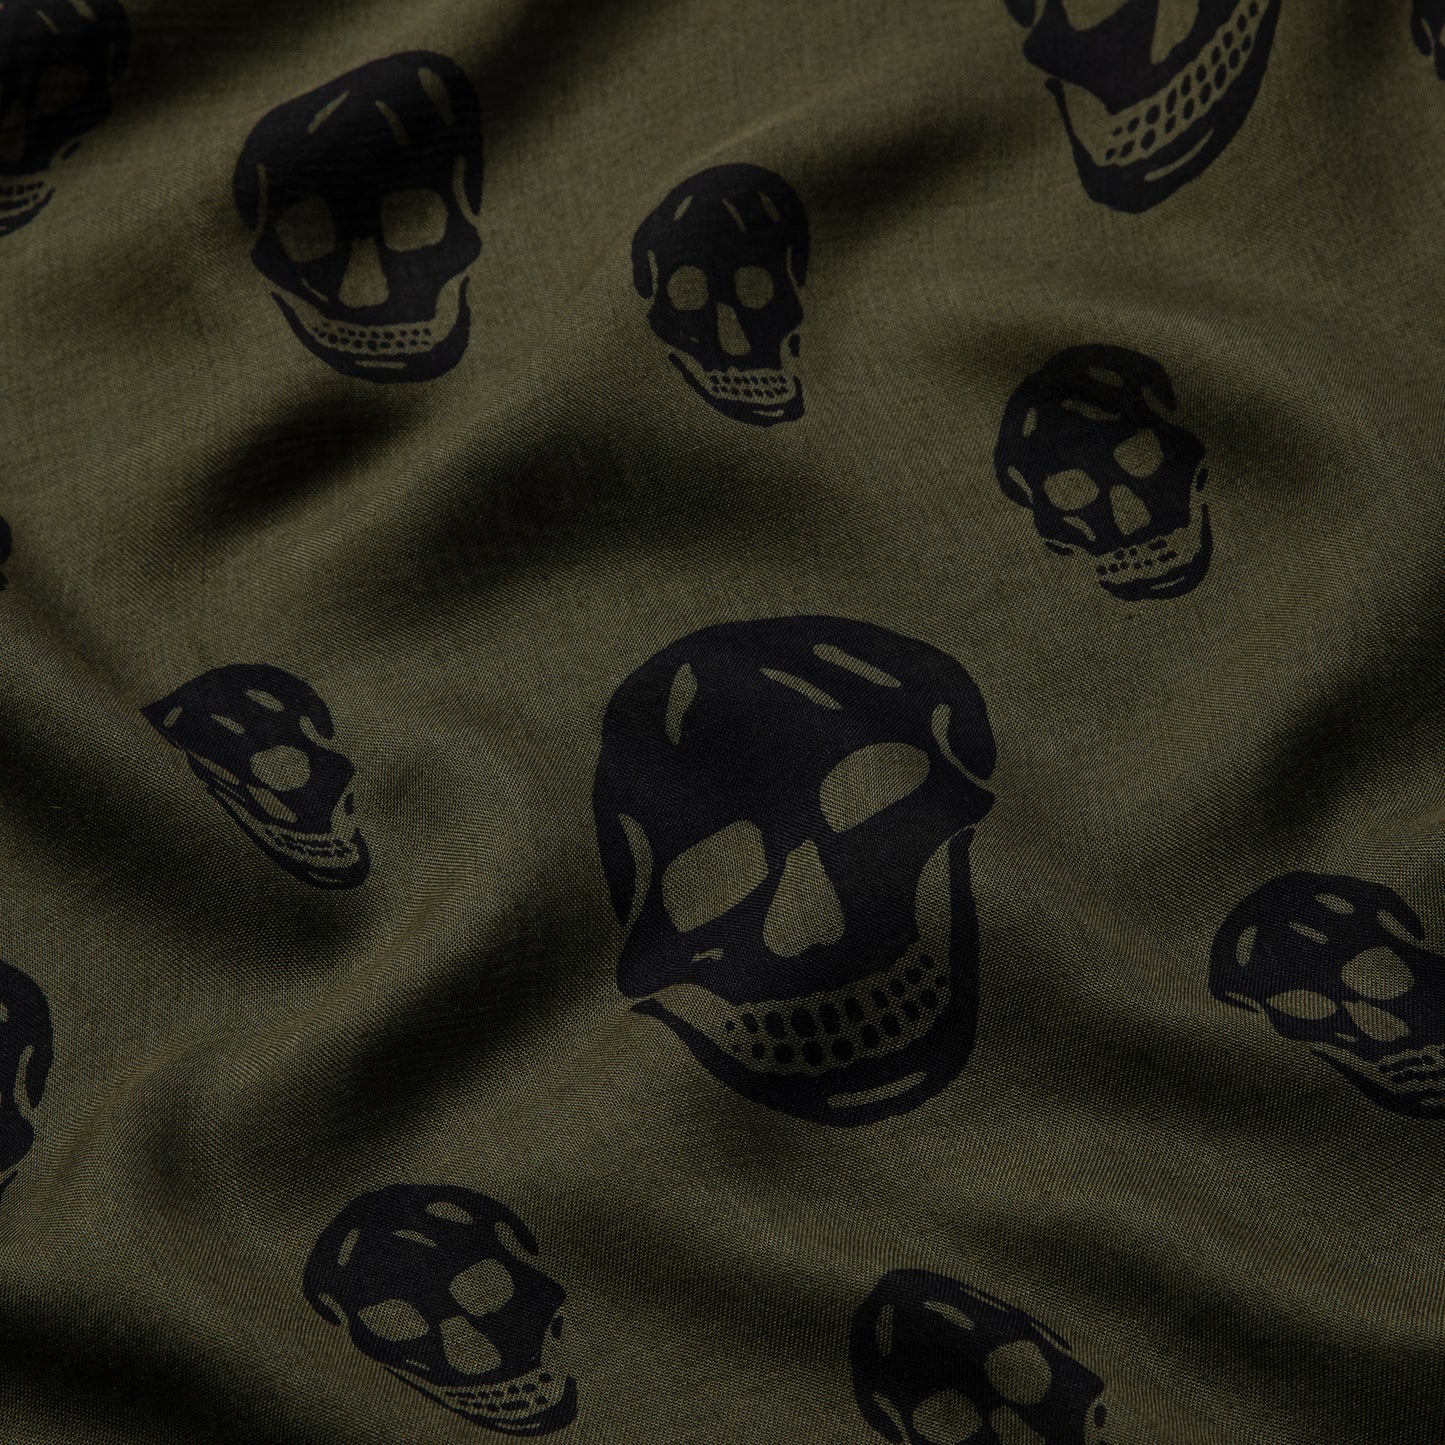 Alexander McQueen Skull Scarf (Khaki/Black)